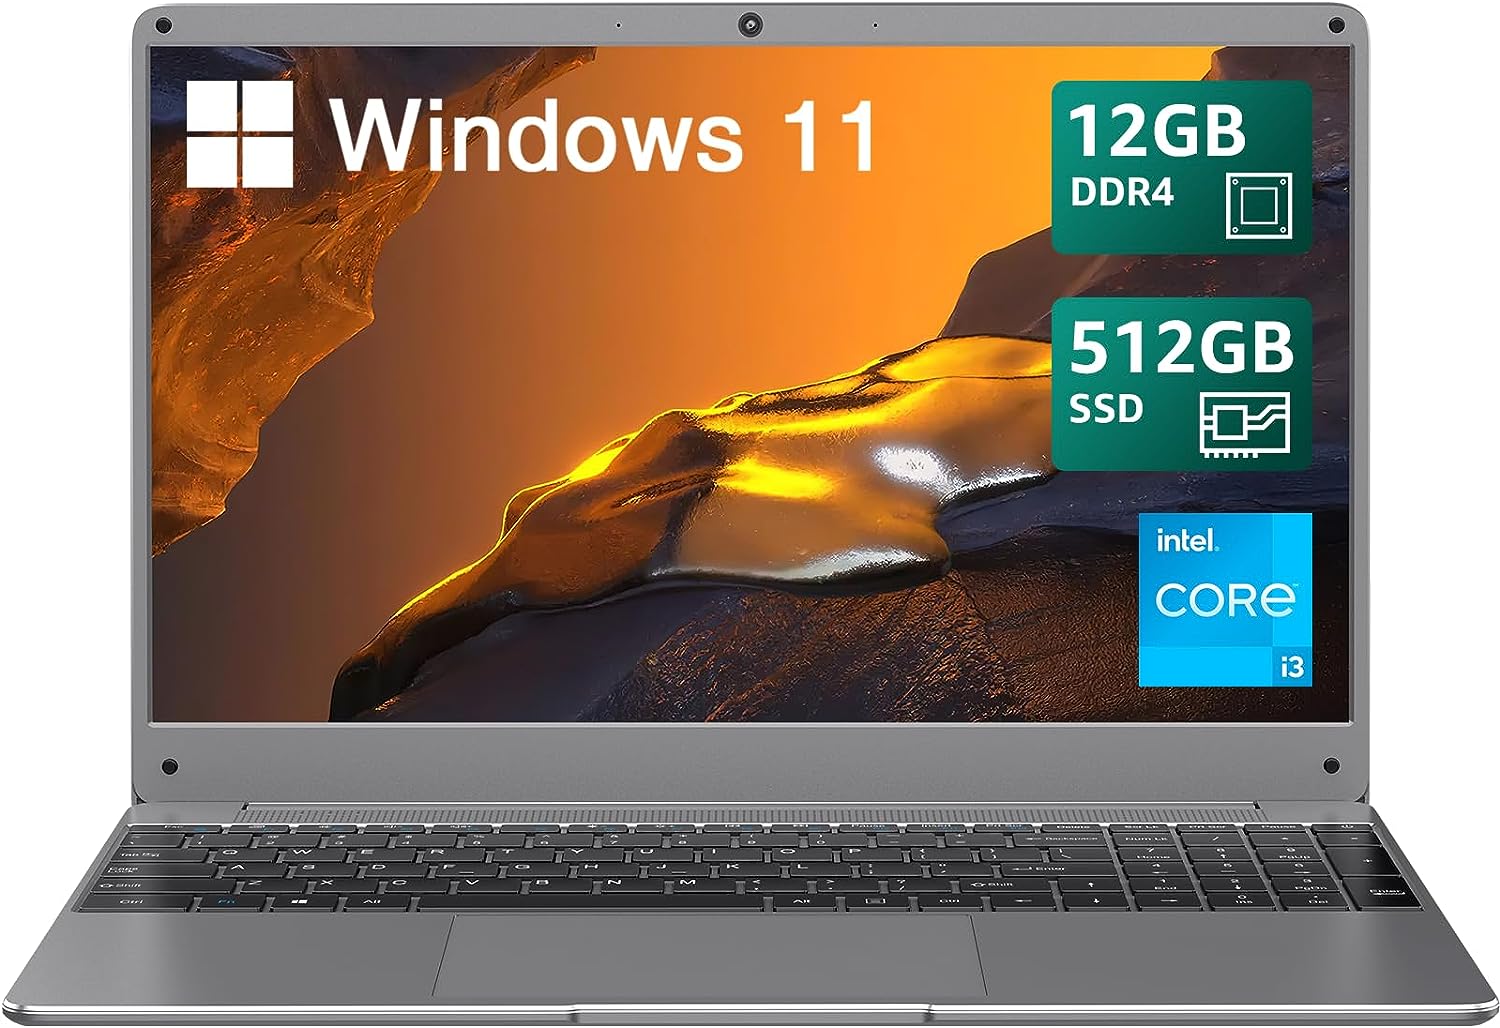 BiTECOOL 15.6 Windows 11 Laptop, Intel Core i3-5005U, 12GB RAM, 512GB SSD, FHD IPS Display, 2.4G/5G WiFi, BT5.0, RJ45, Type C, Webcam, Long Battery Life - for Work, Study, and Entertainment